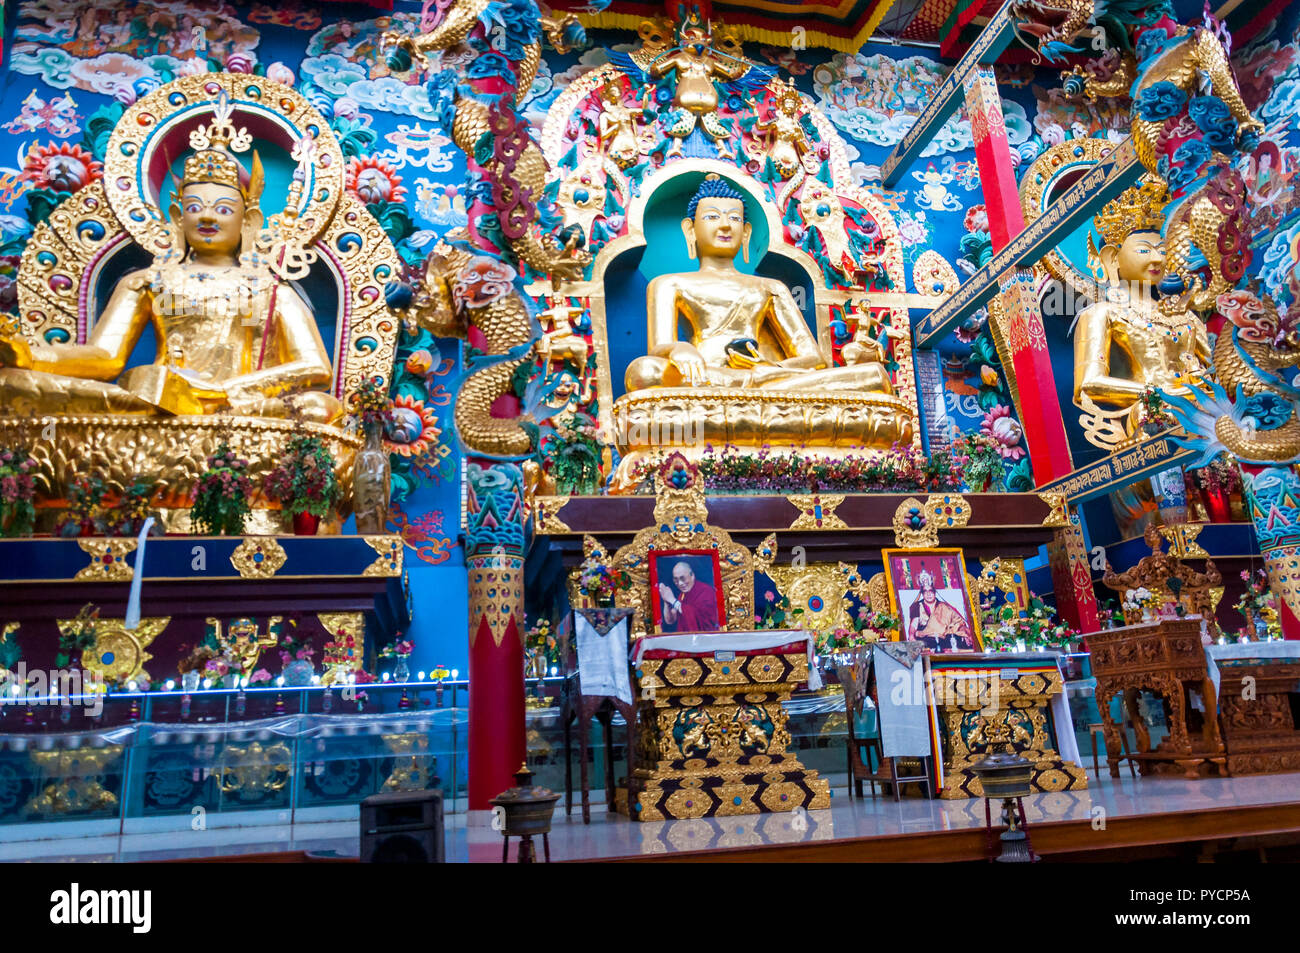 Bylakuppe, Karnataka, India - January 9, 2015: 18 meters high statues inside the Golden Temple - Padmasmbhava, the Buddha and Amitayus. Namdroling Nyi Stock Photo